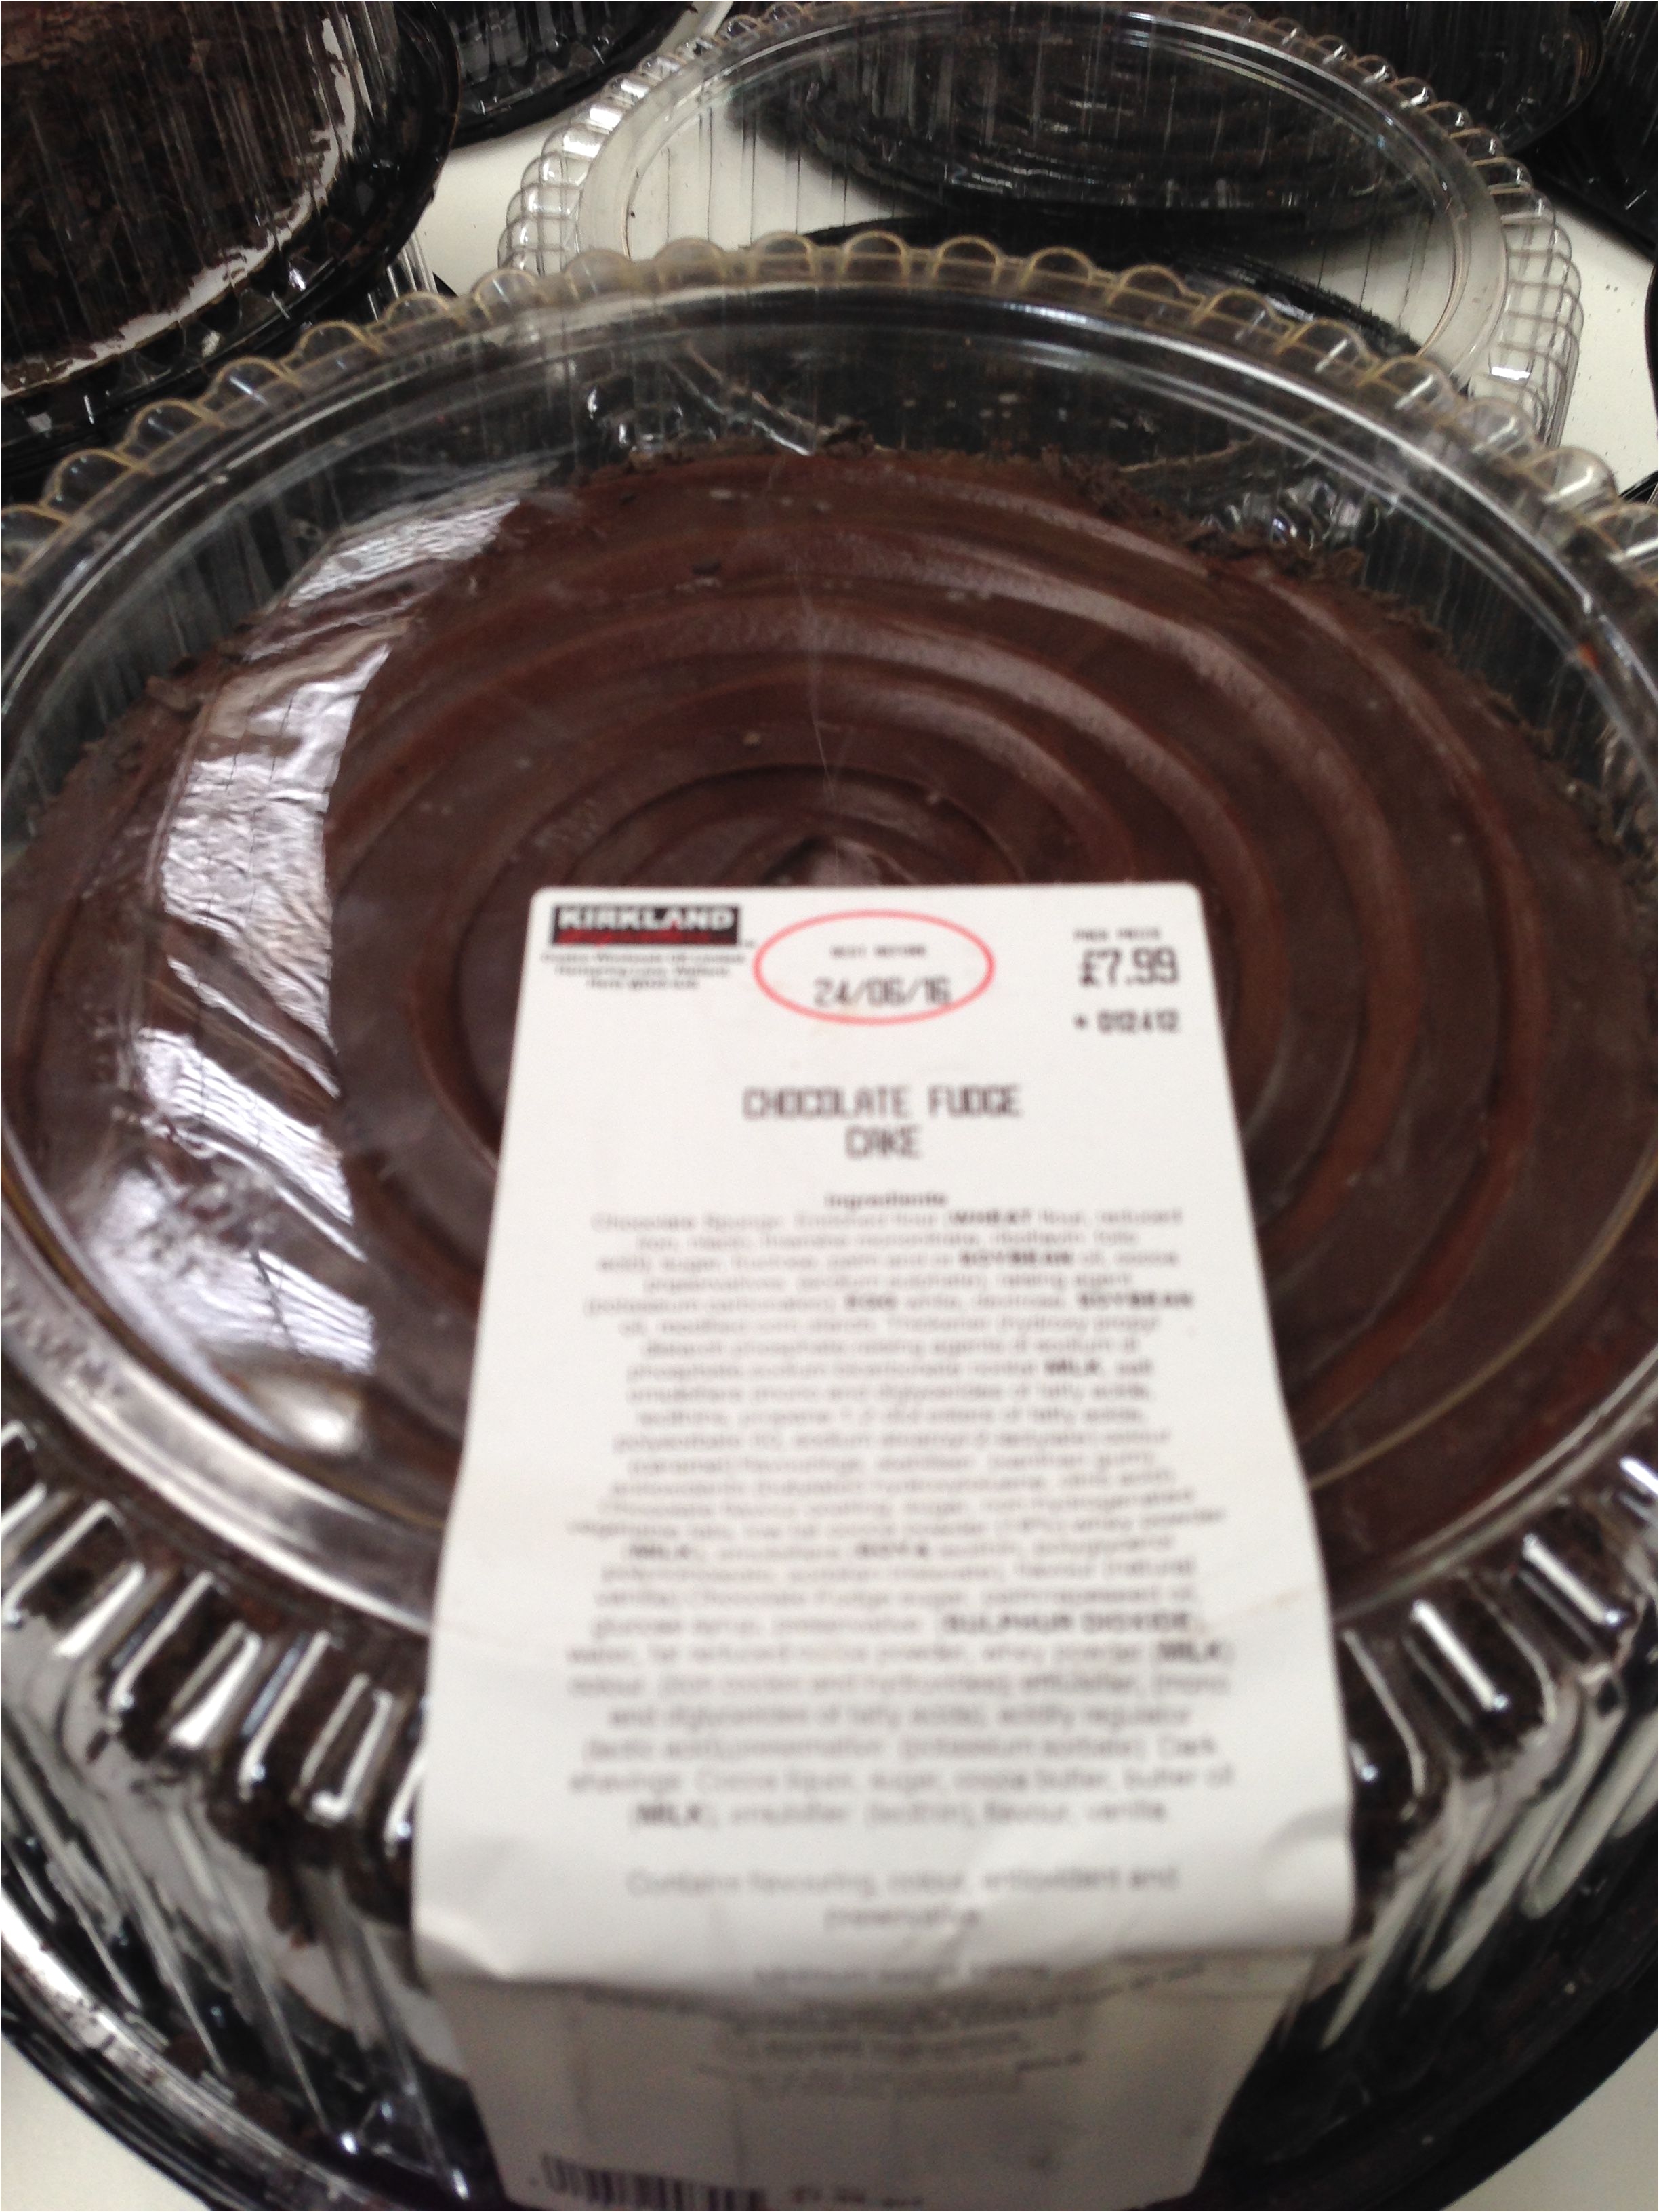 chocolate fudge cake costco a 7 99